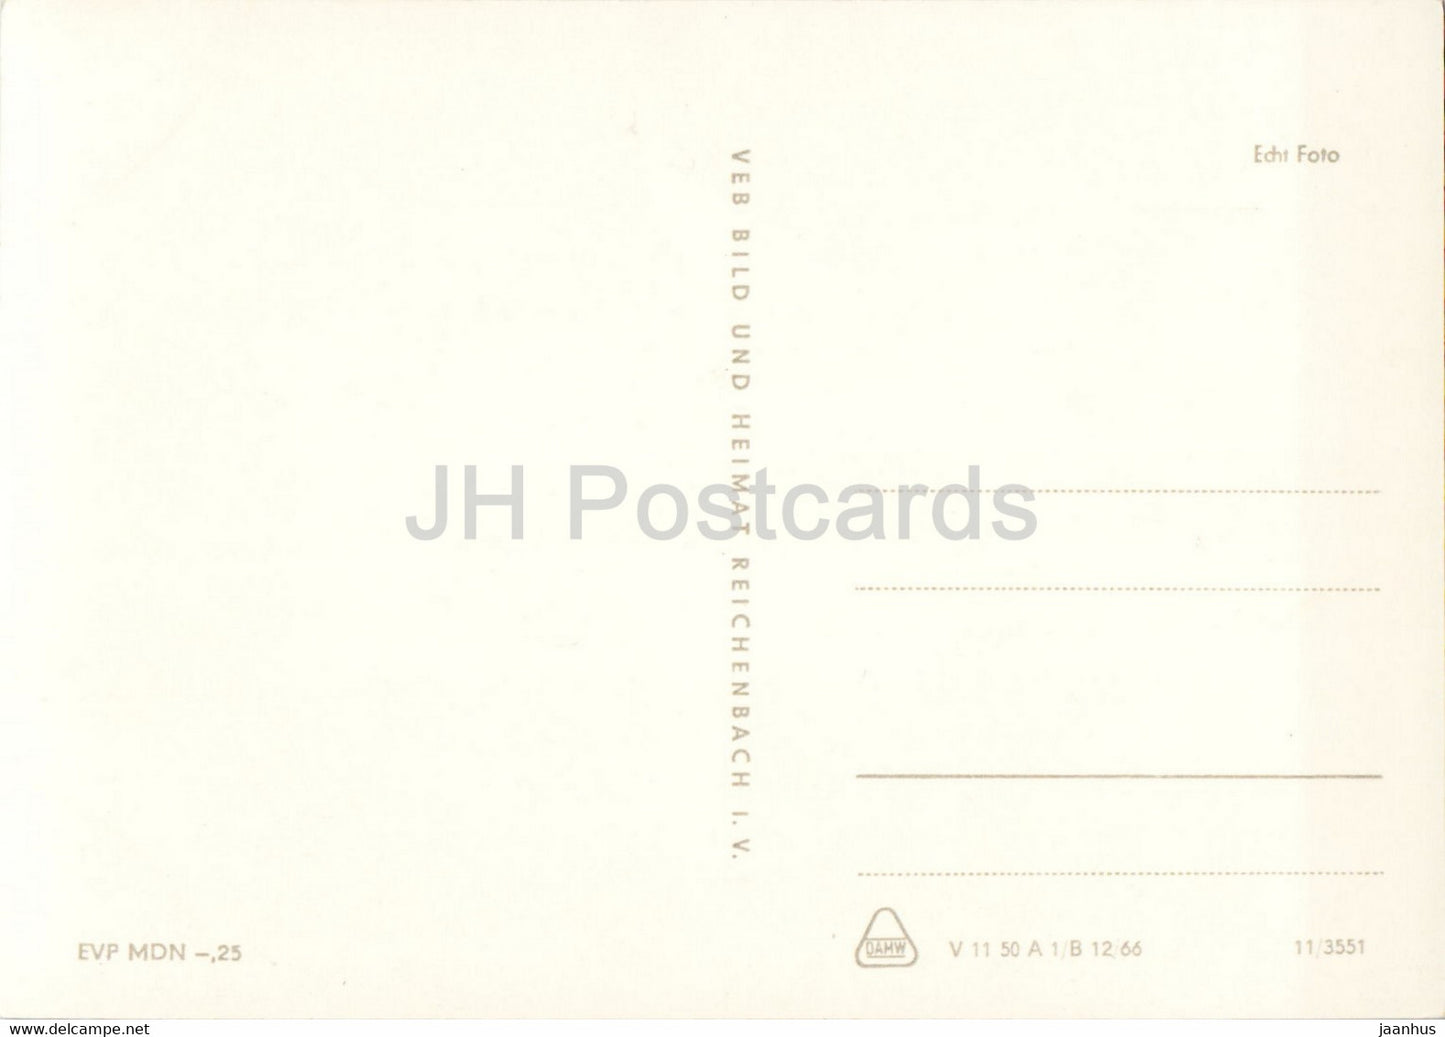 Stutzerbach - Thuringe - carte postale ancienne - Allemagne DDR - inutilisée